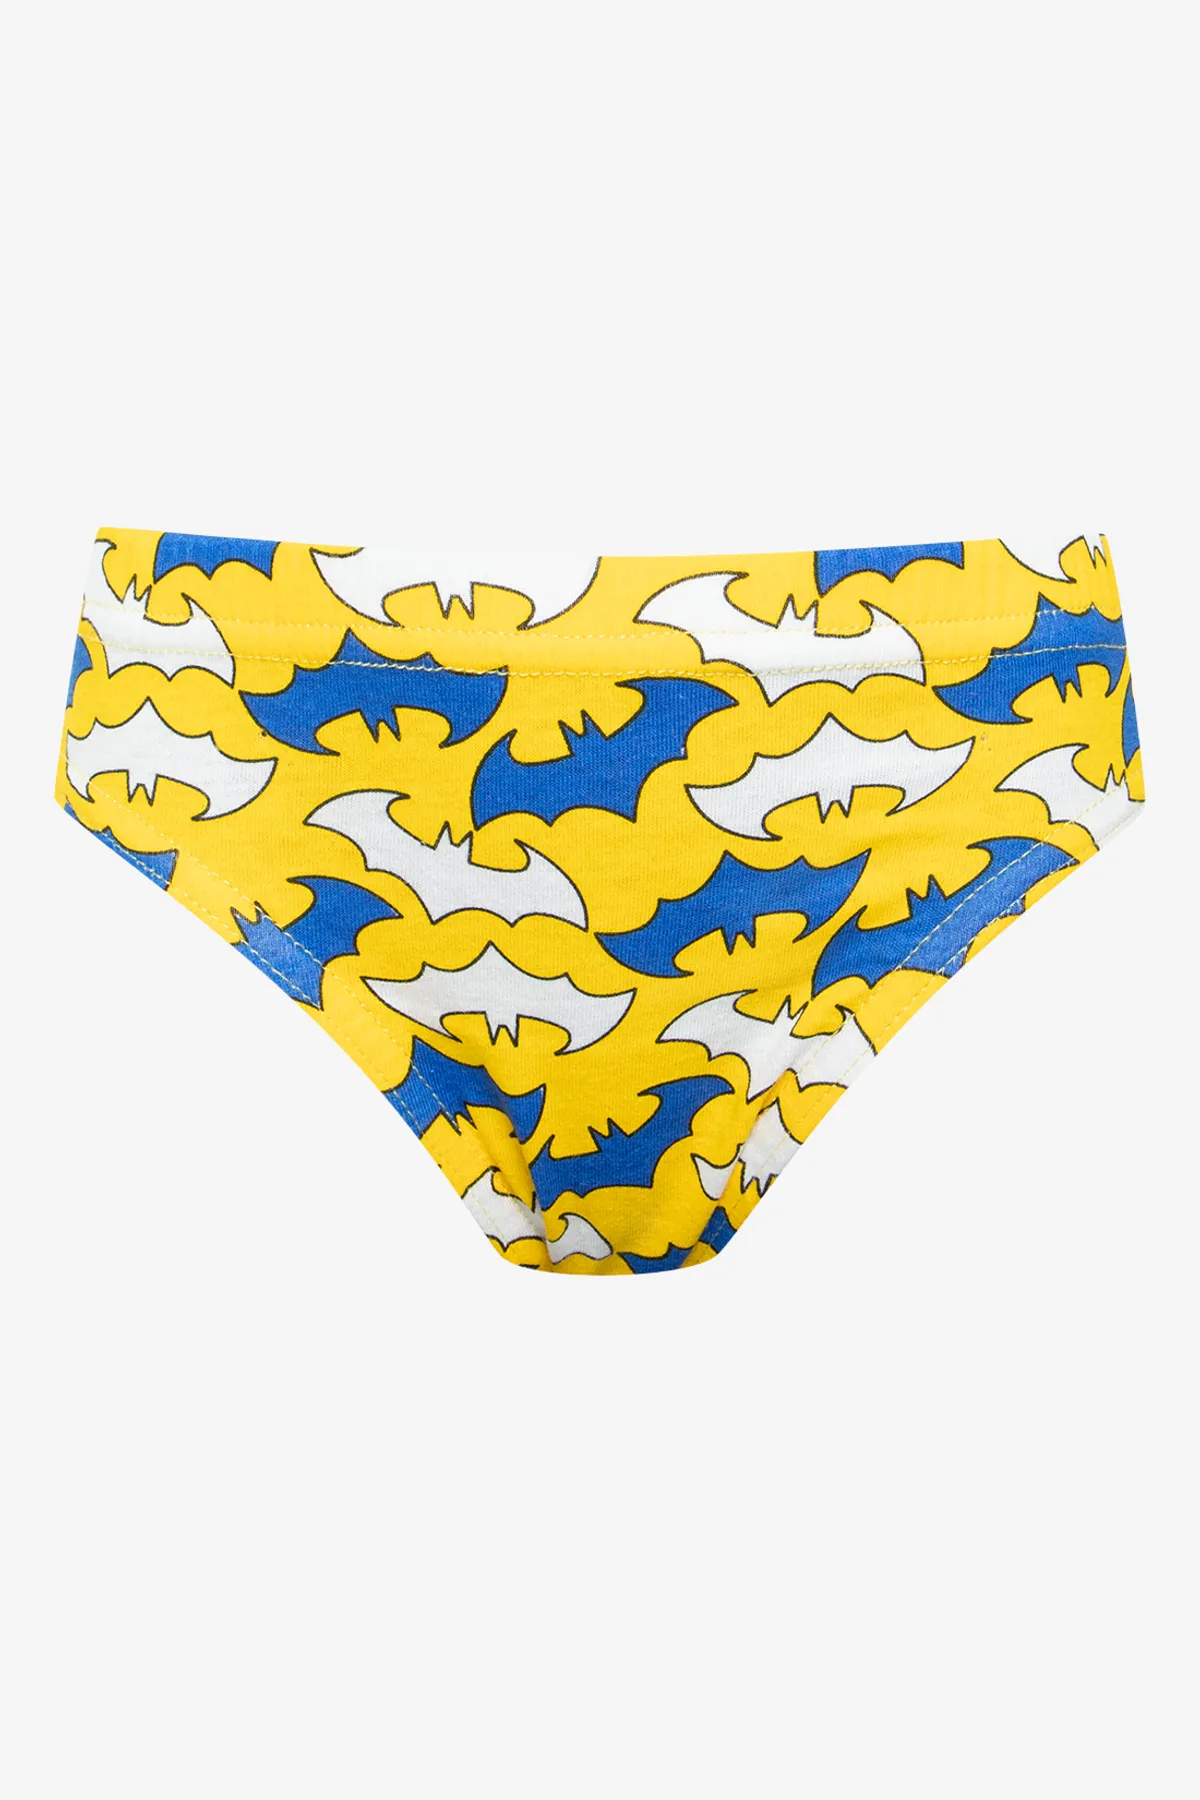 3 Pack Batman briefs multi - KIDS CHARACTER Underwear